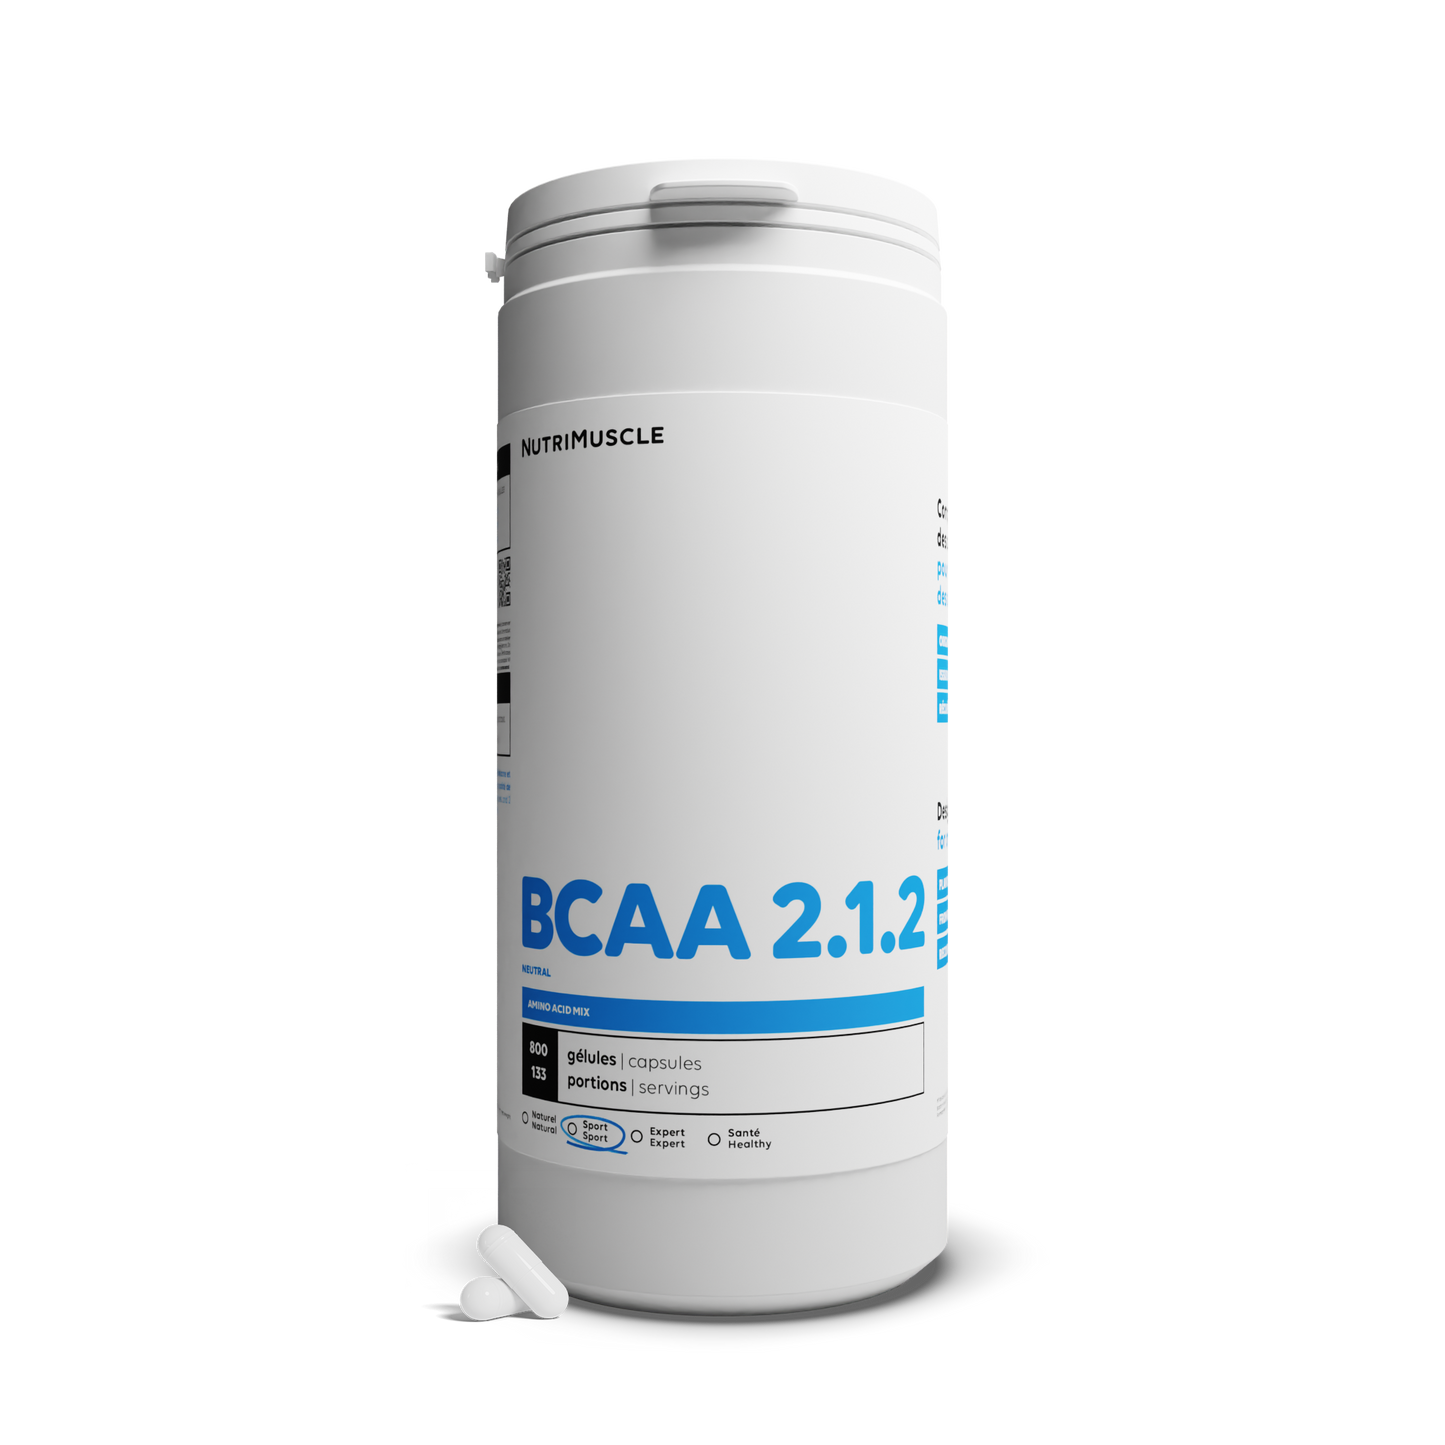 Resistenza BCAA 2.1.2 nelle capsule